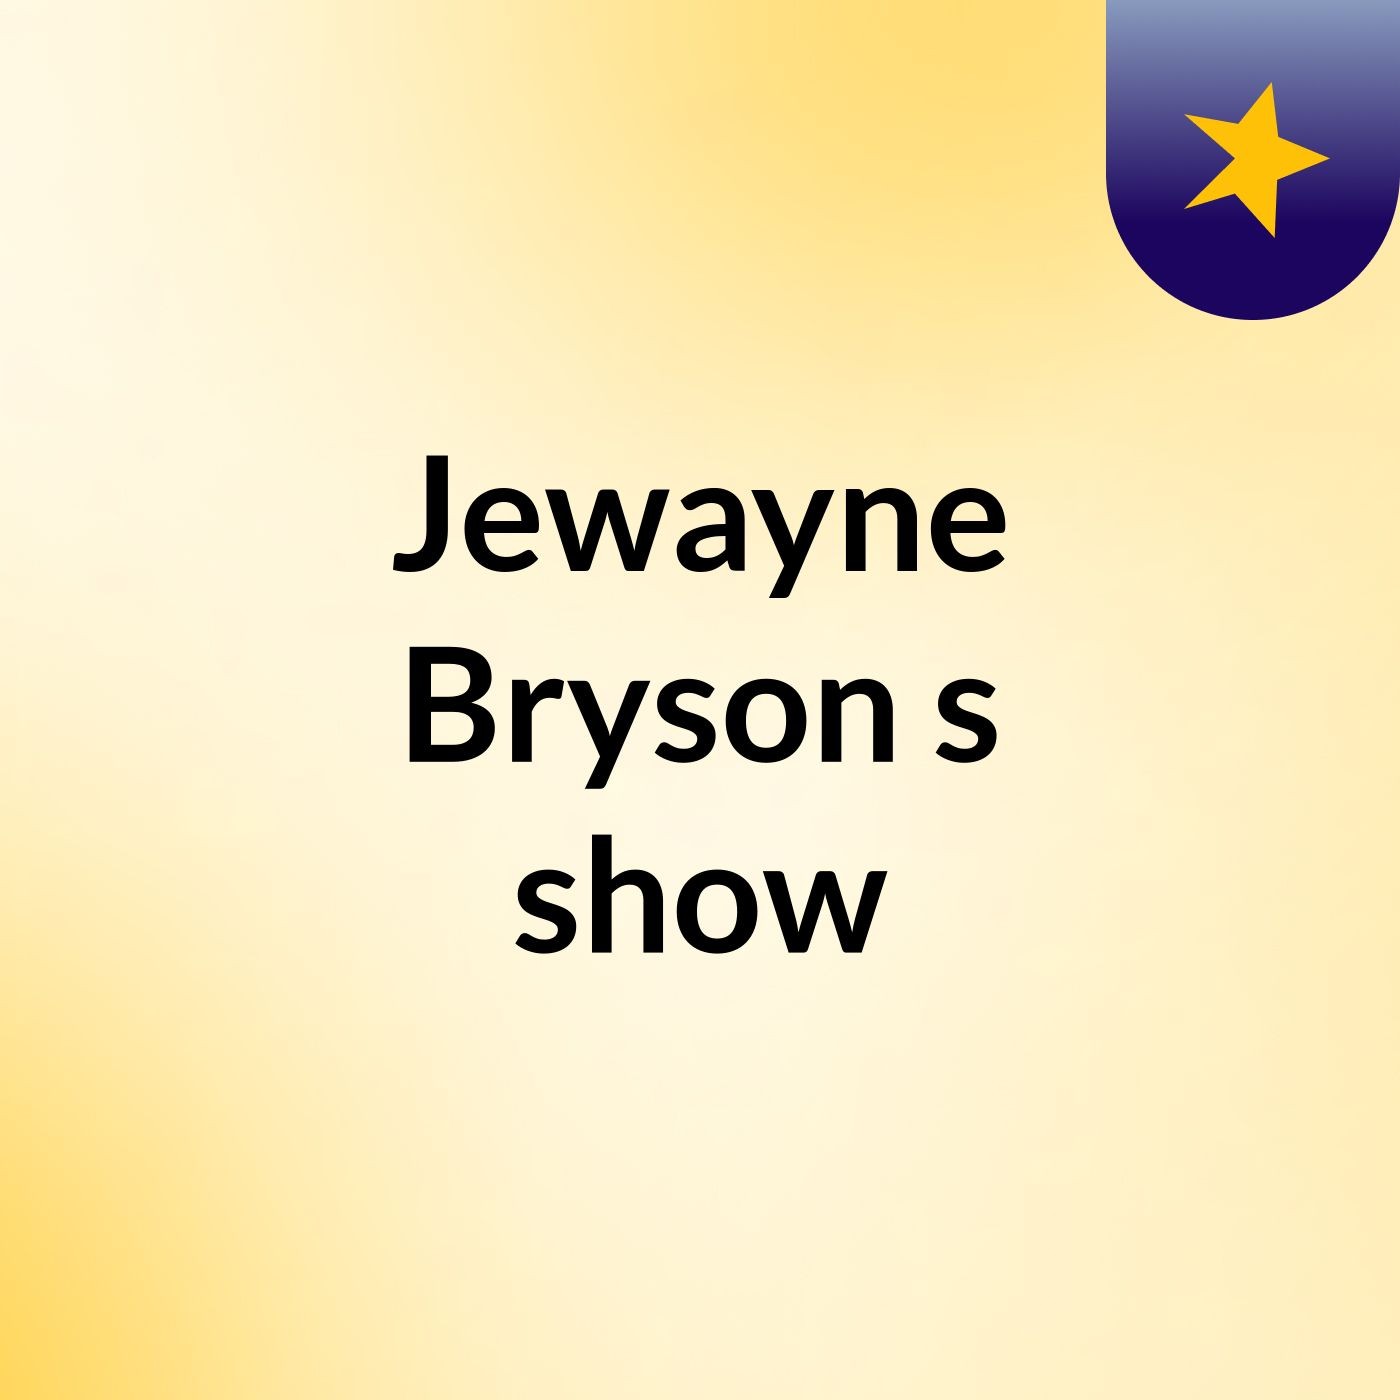 Jewayne Bryson's show